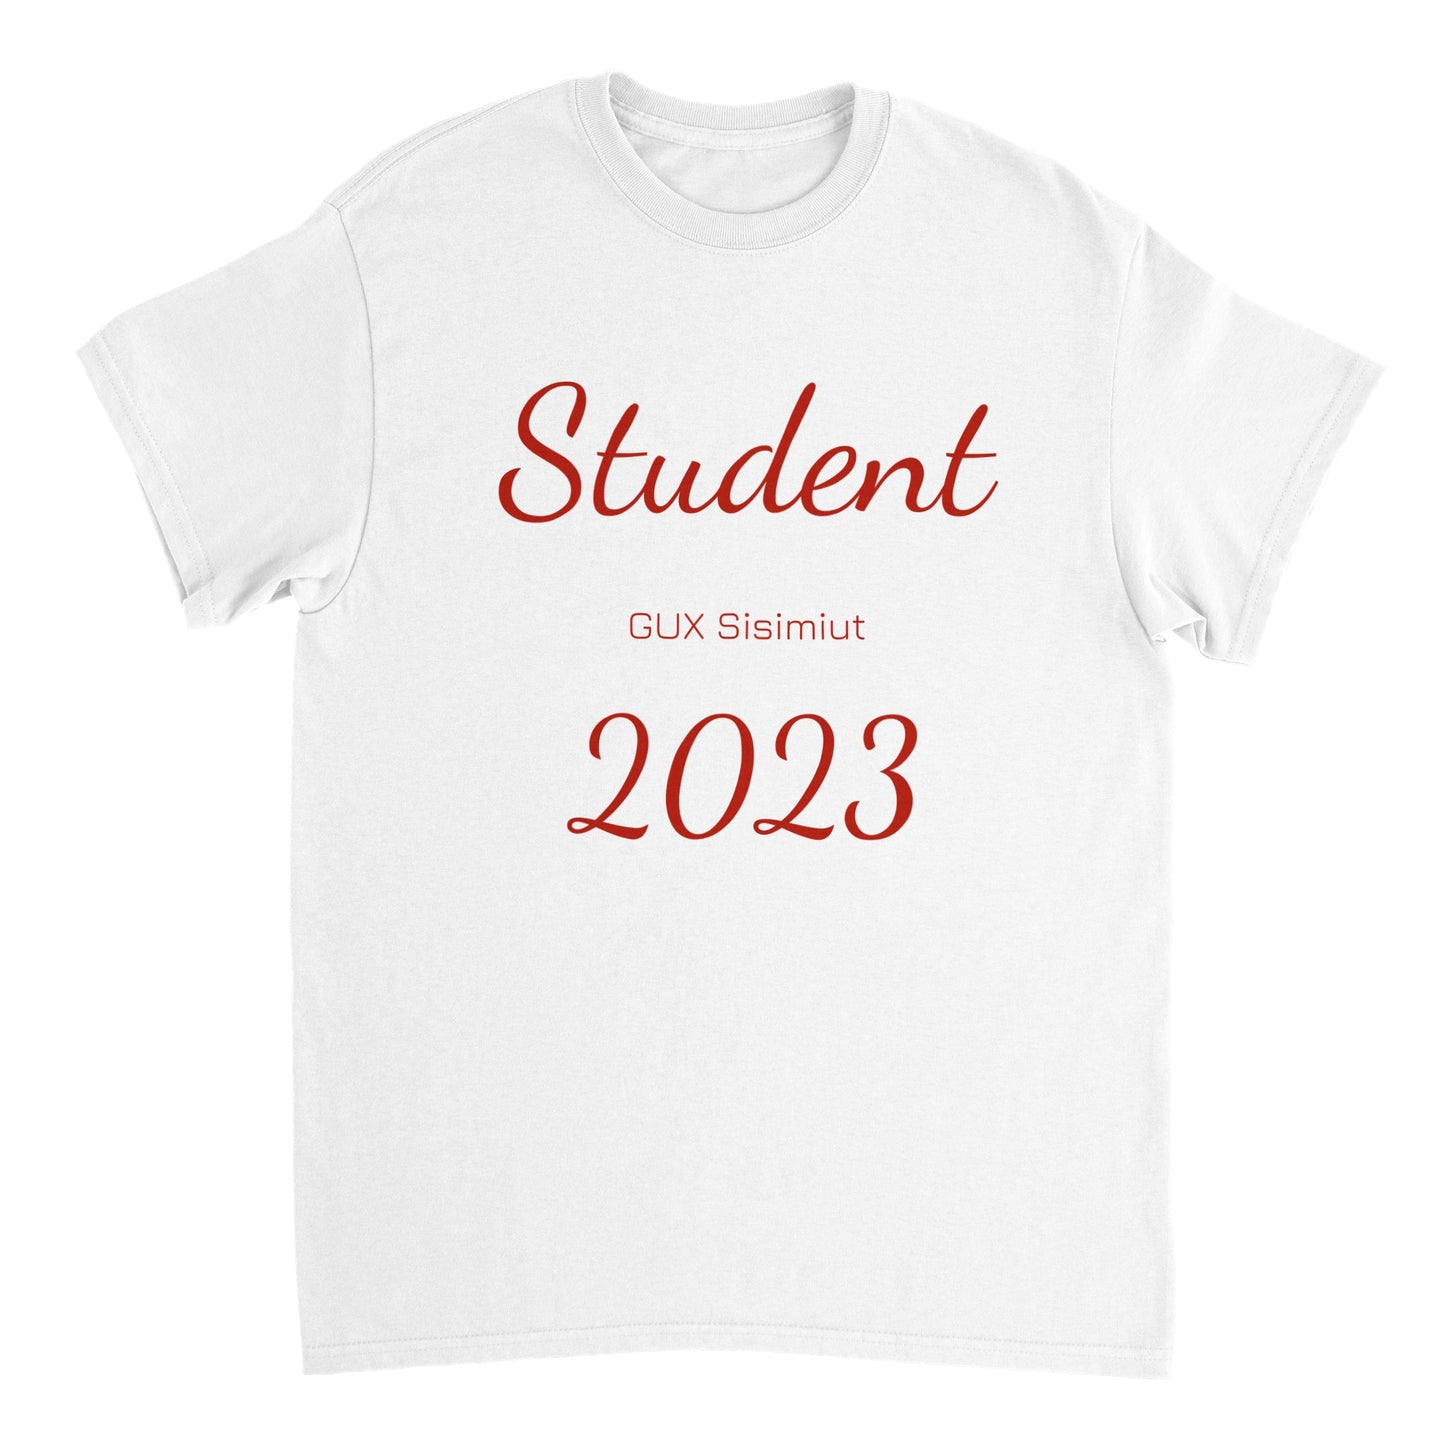 Student 2023 T-shirt